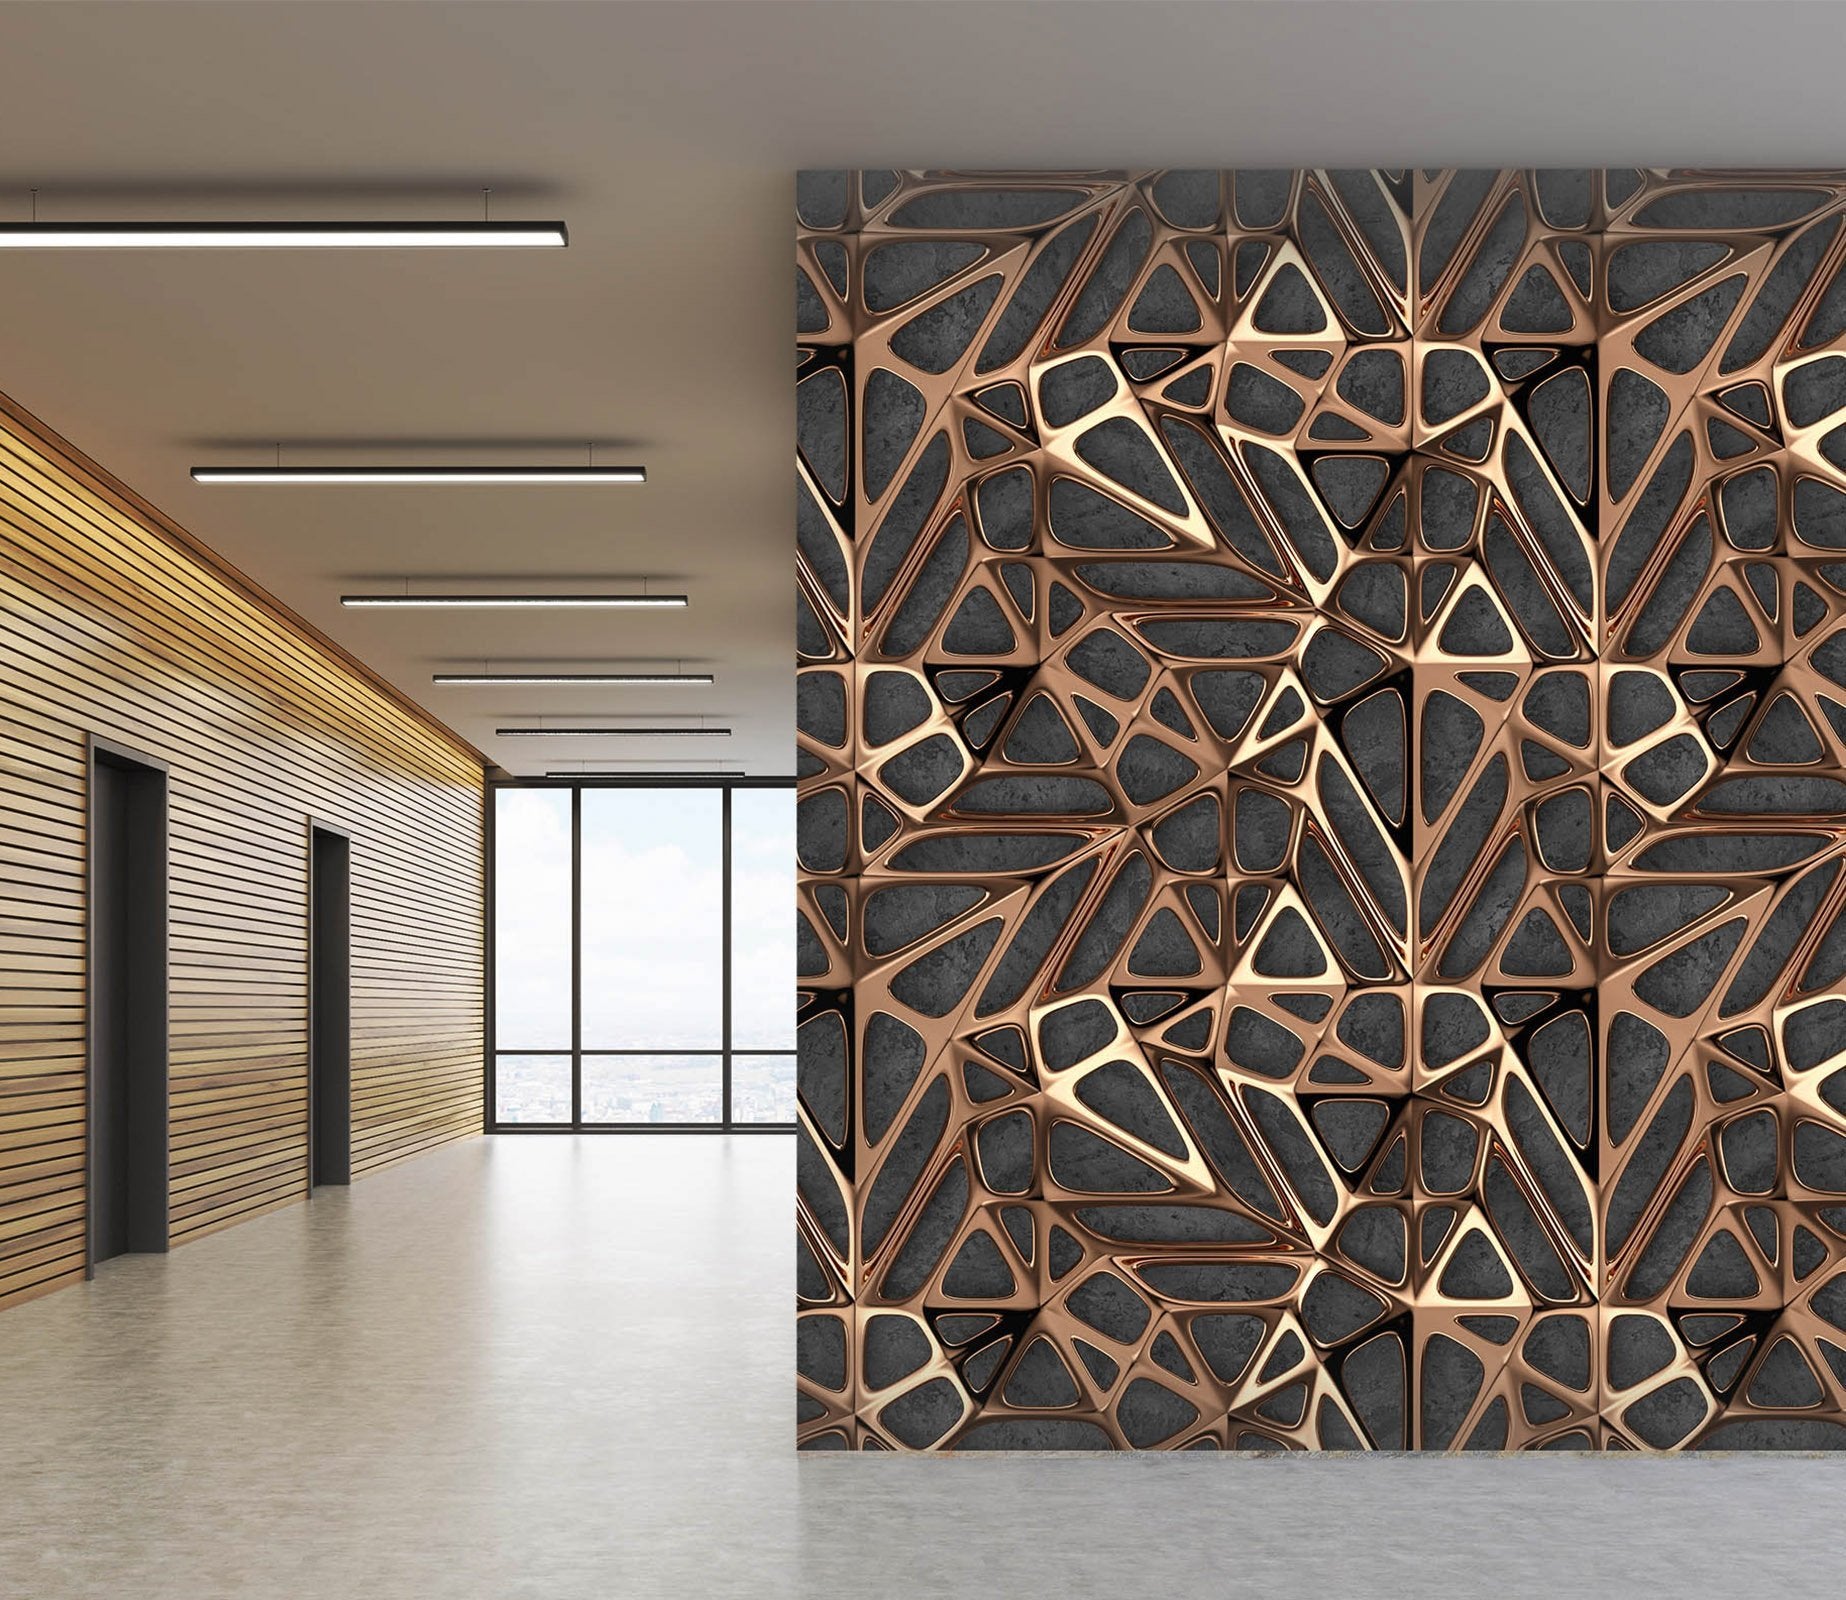 3D Golden Spider Web 082 Marble Tile Texture Wallpaper AJ Wallpaper 2 